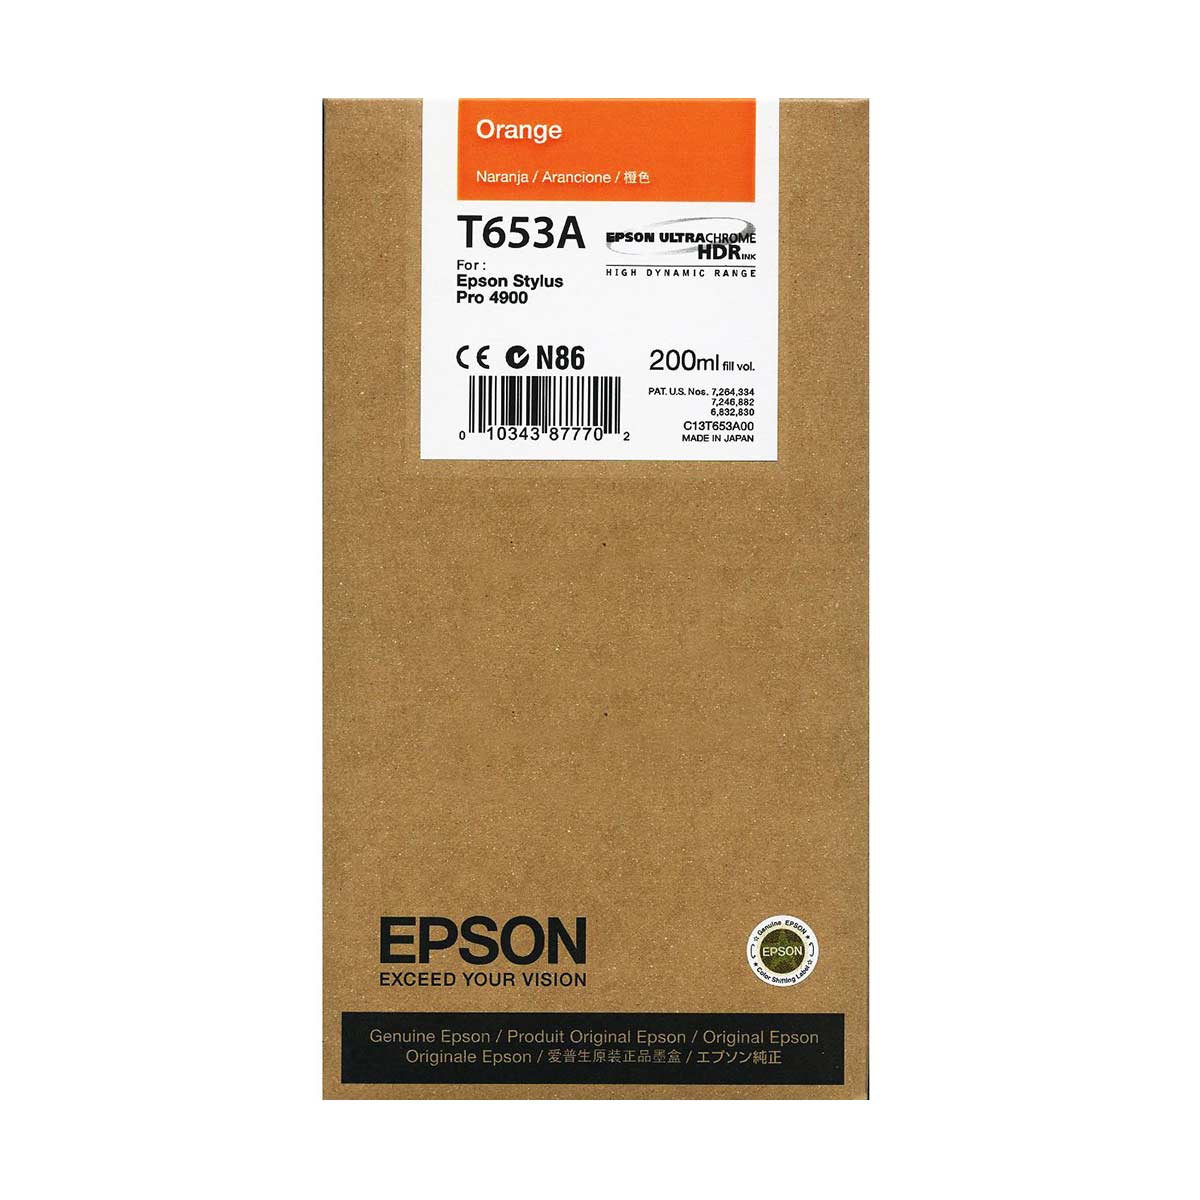 Epson T653A 4900 Ultrachrome Ink HDR 200ml Orange